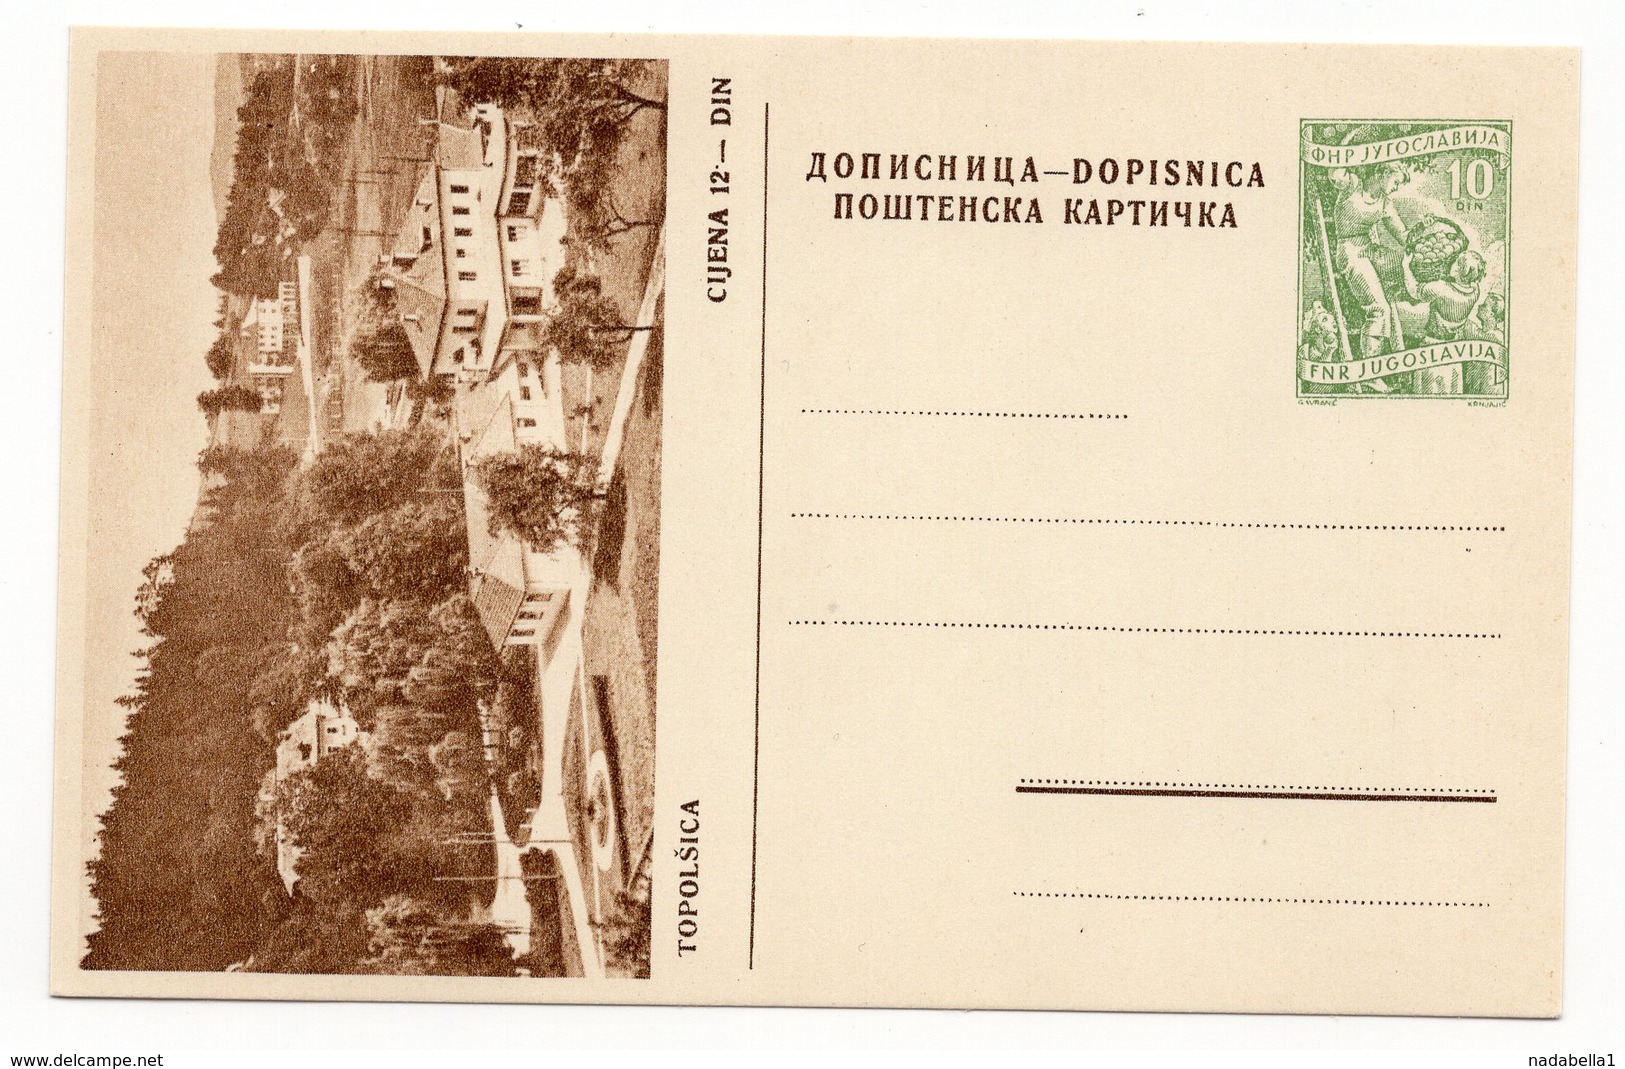 1956, YUGOSLAVIA, TOPOLSICA, SLOVENIA,10 DINARA GREEN, ILLUSTRATED STATIONERY CARD, MINT - Postal Stationery